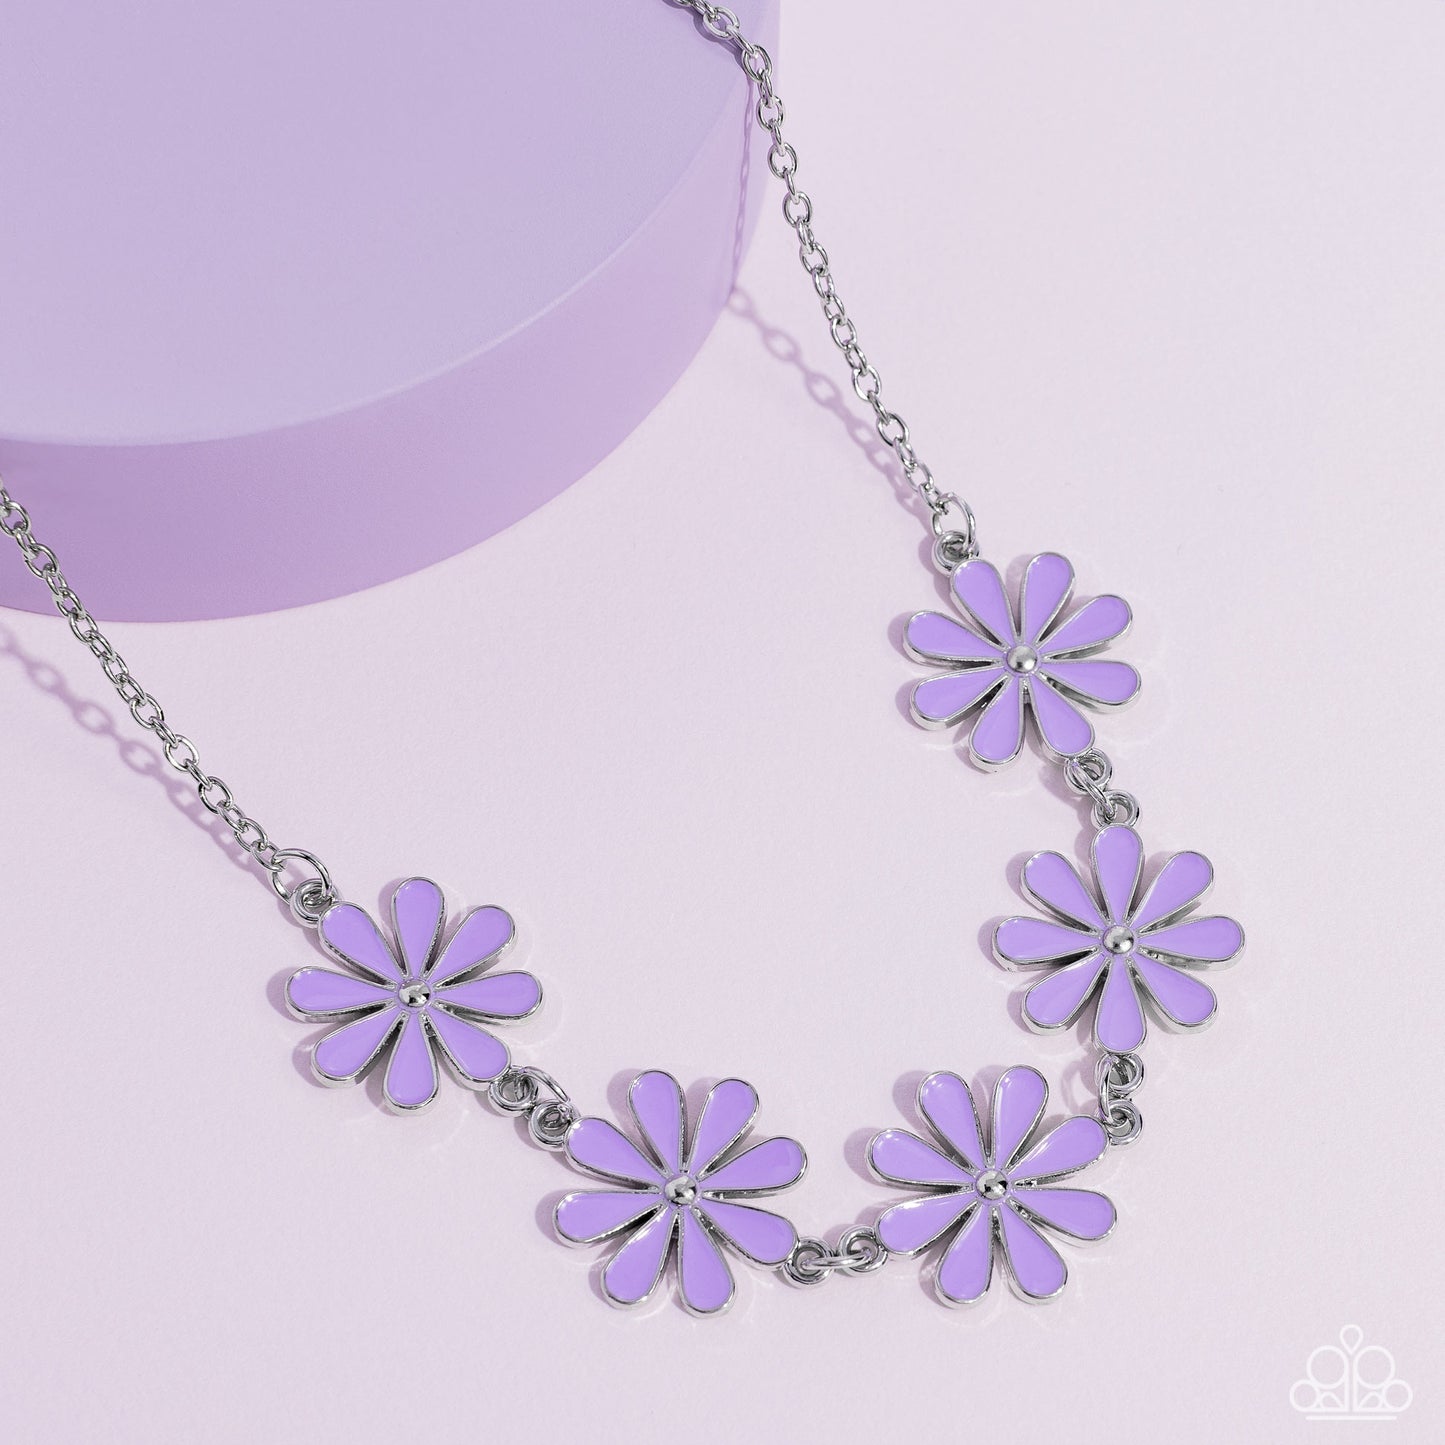 Flora Fantasy - Purple Flower Necklace - Bling by Danielle Baker